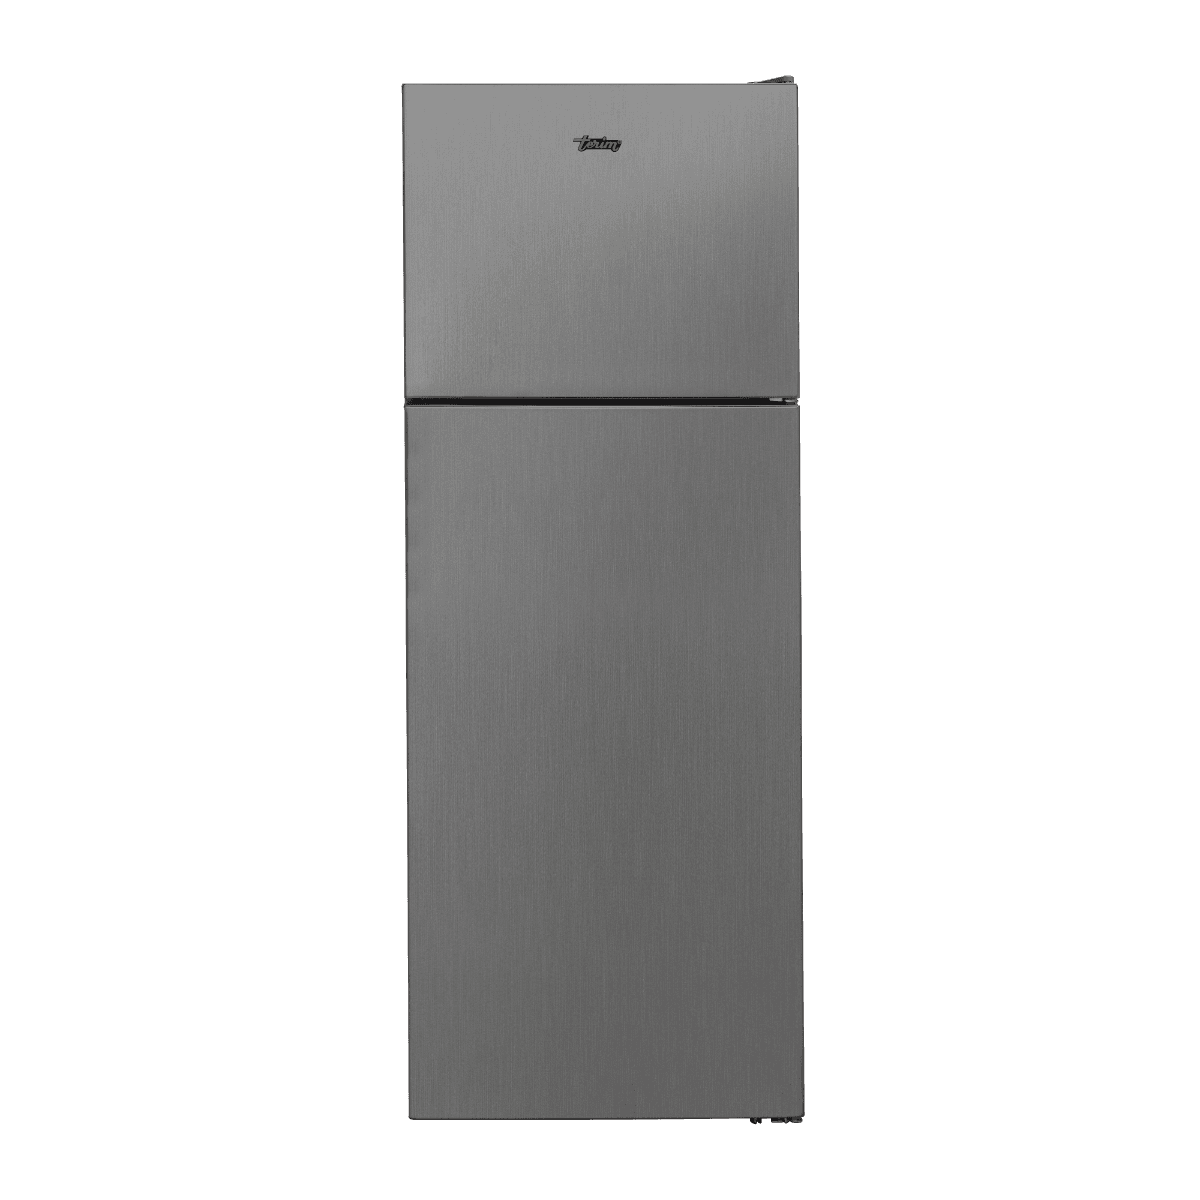 Terim Top Freezer Refrigerator, 530 L, TERR530VS